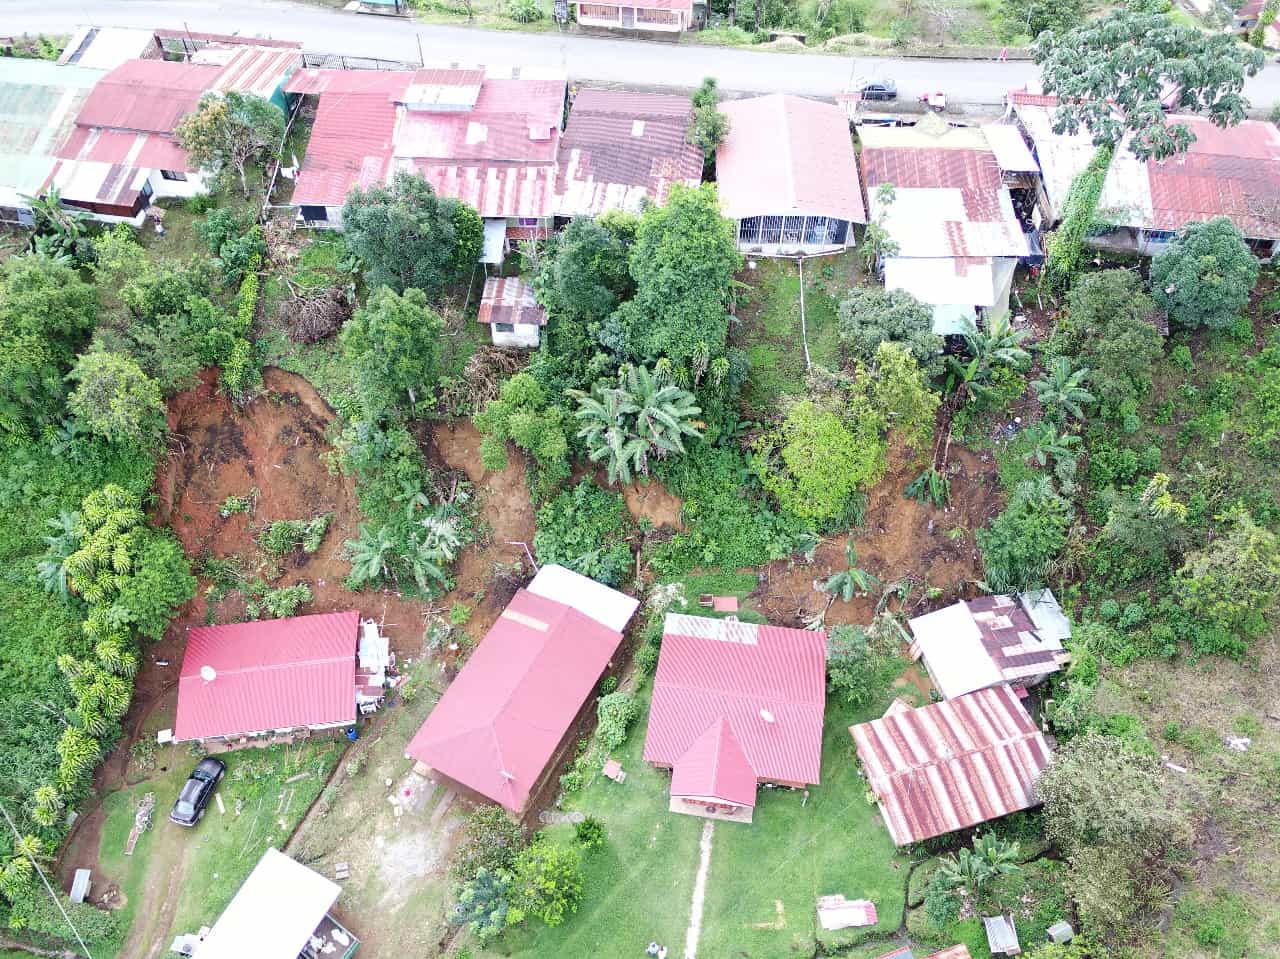 Landslides in Costa Rica in May 2018